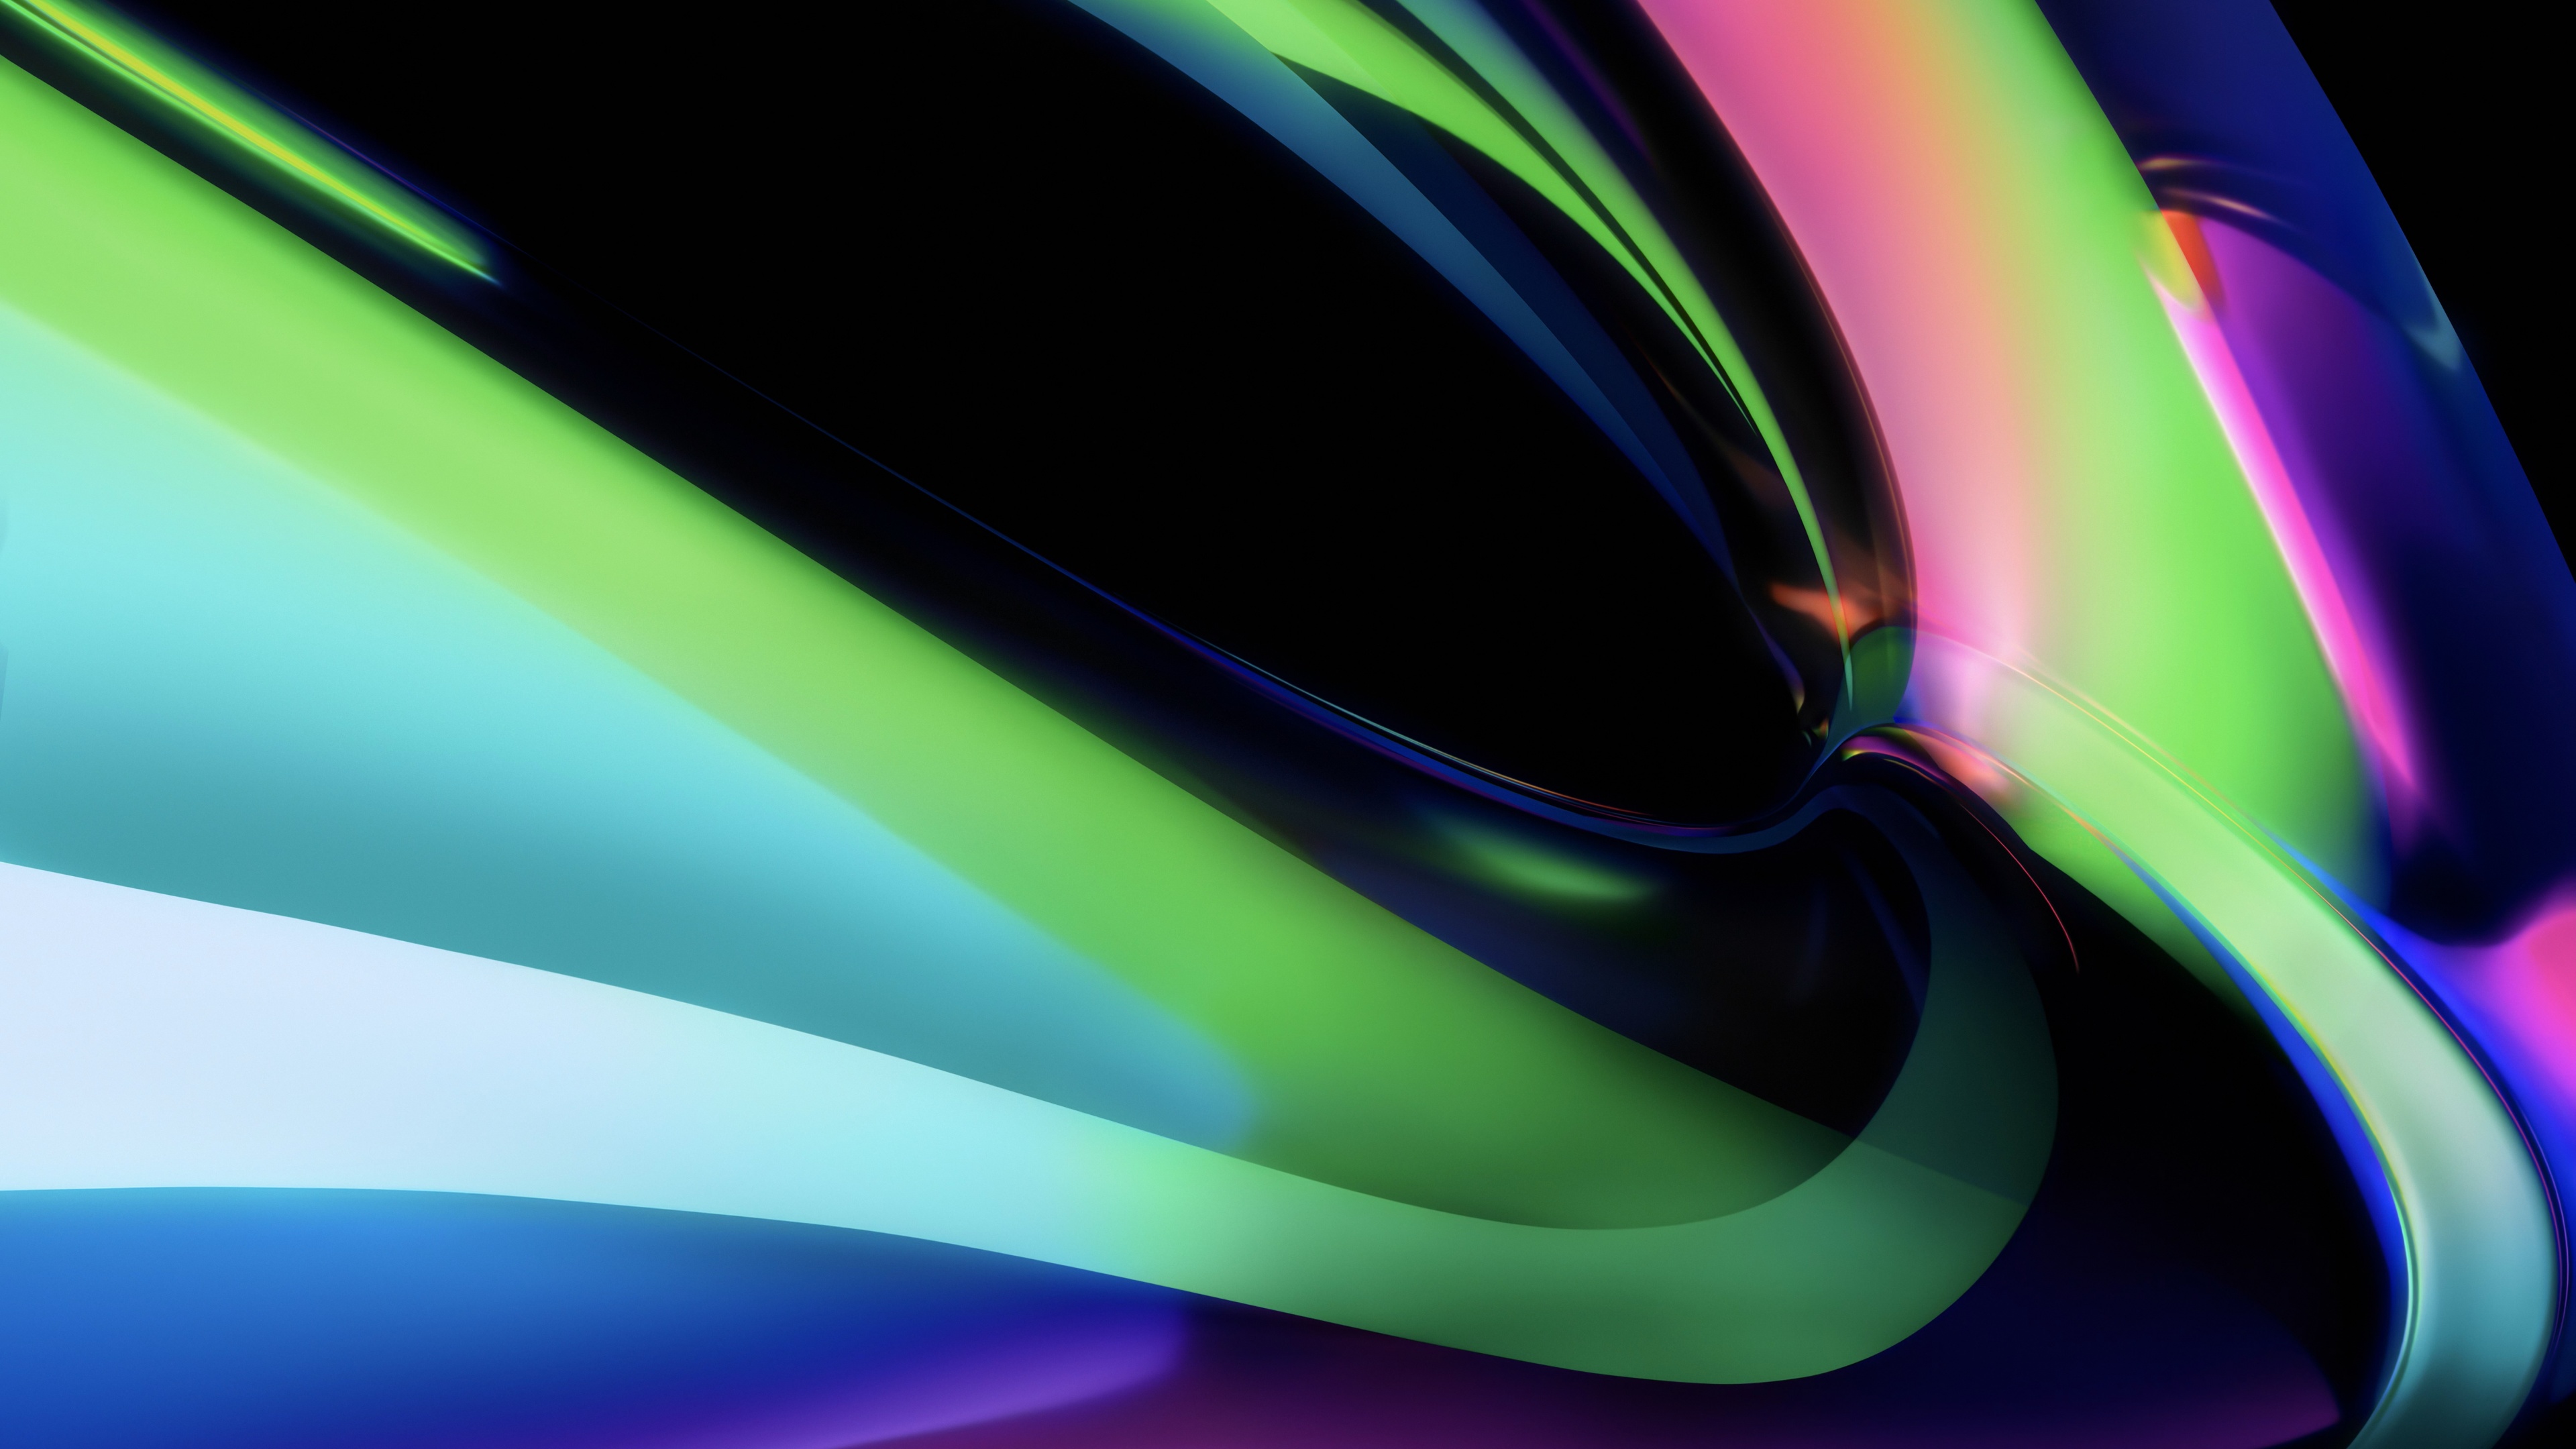 HD wallpaper Neon 4K 8K Stock MacBook Pro pattern abstract multi  colored  Wallpaper Flare